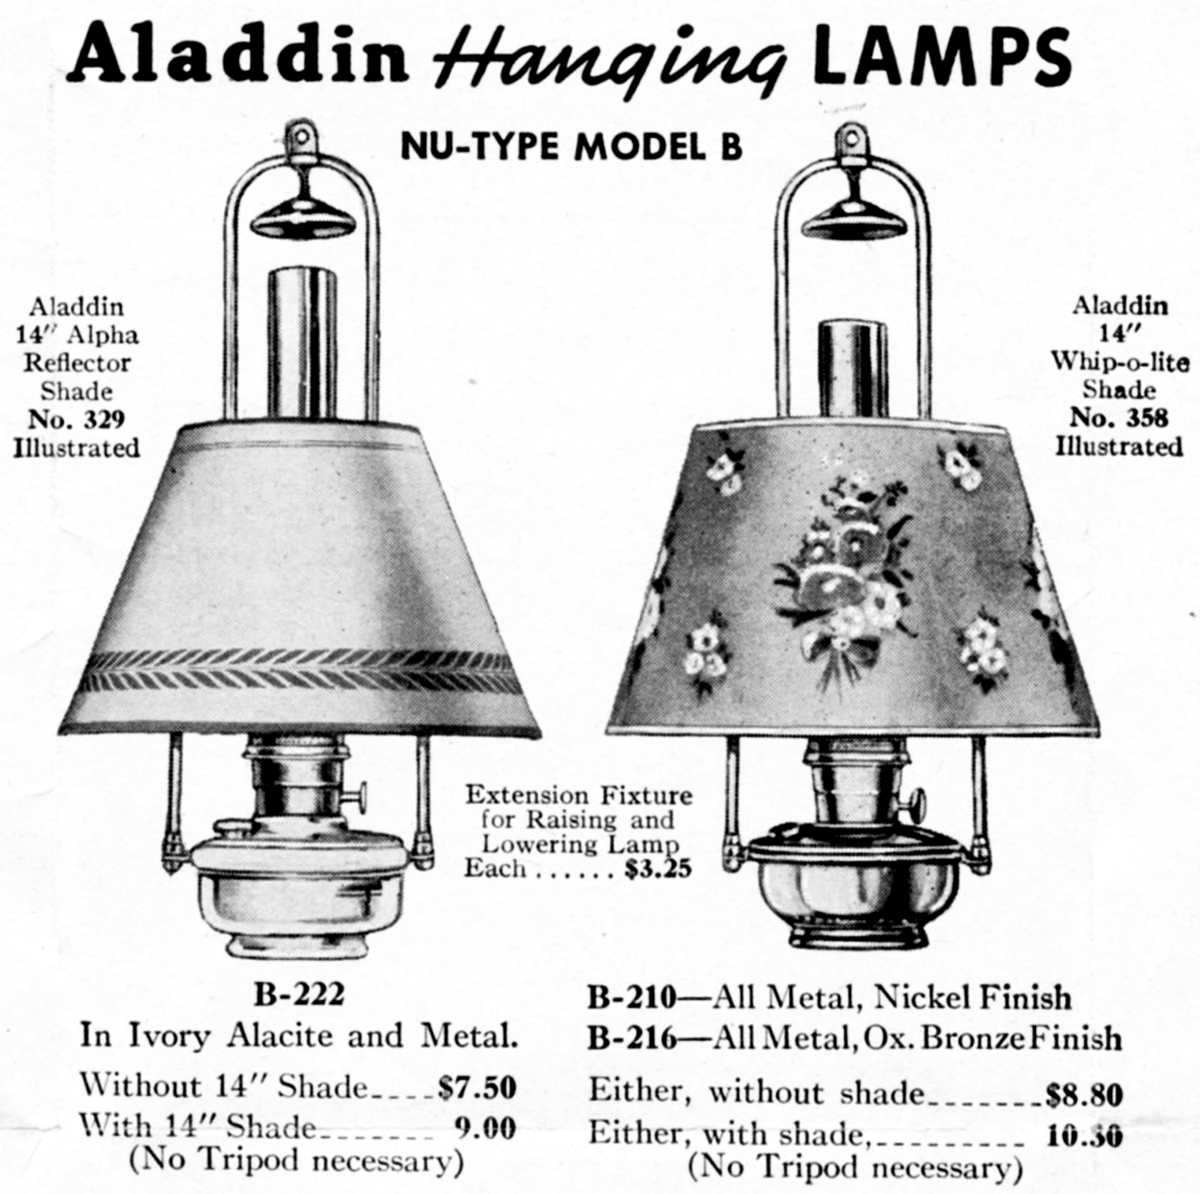 Aladdin model B hanging lamps